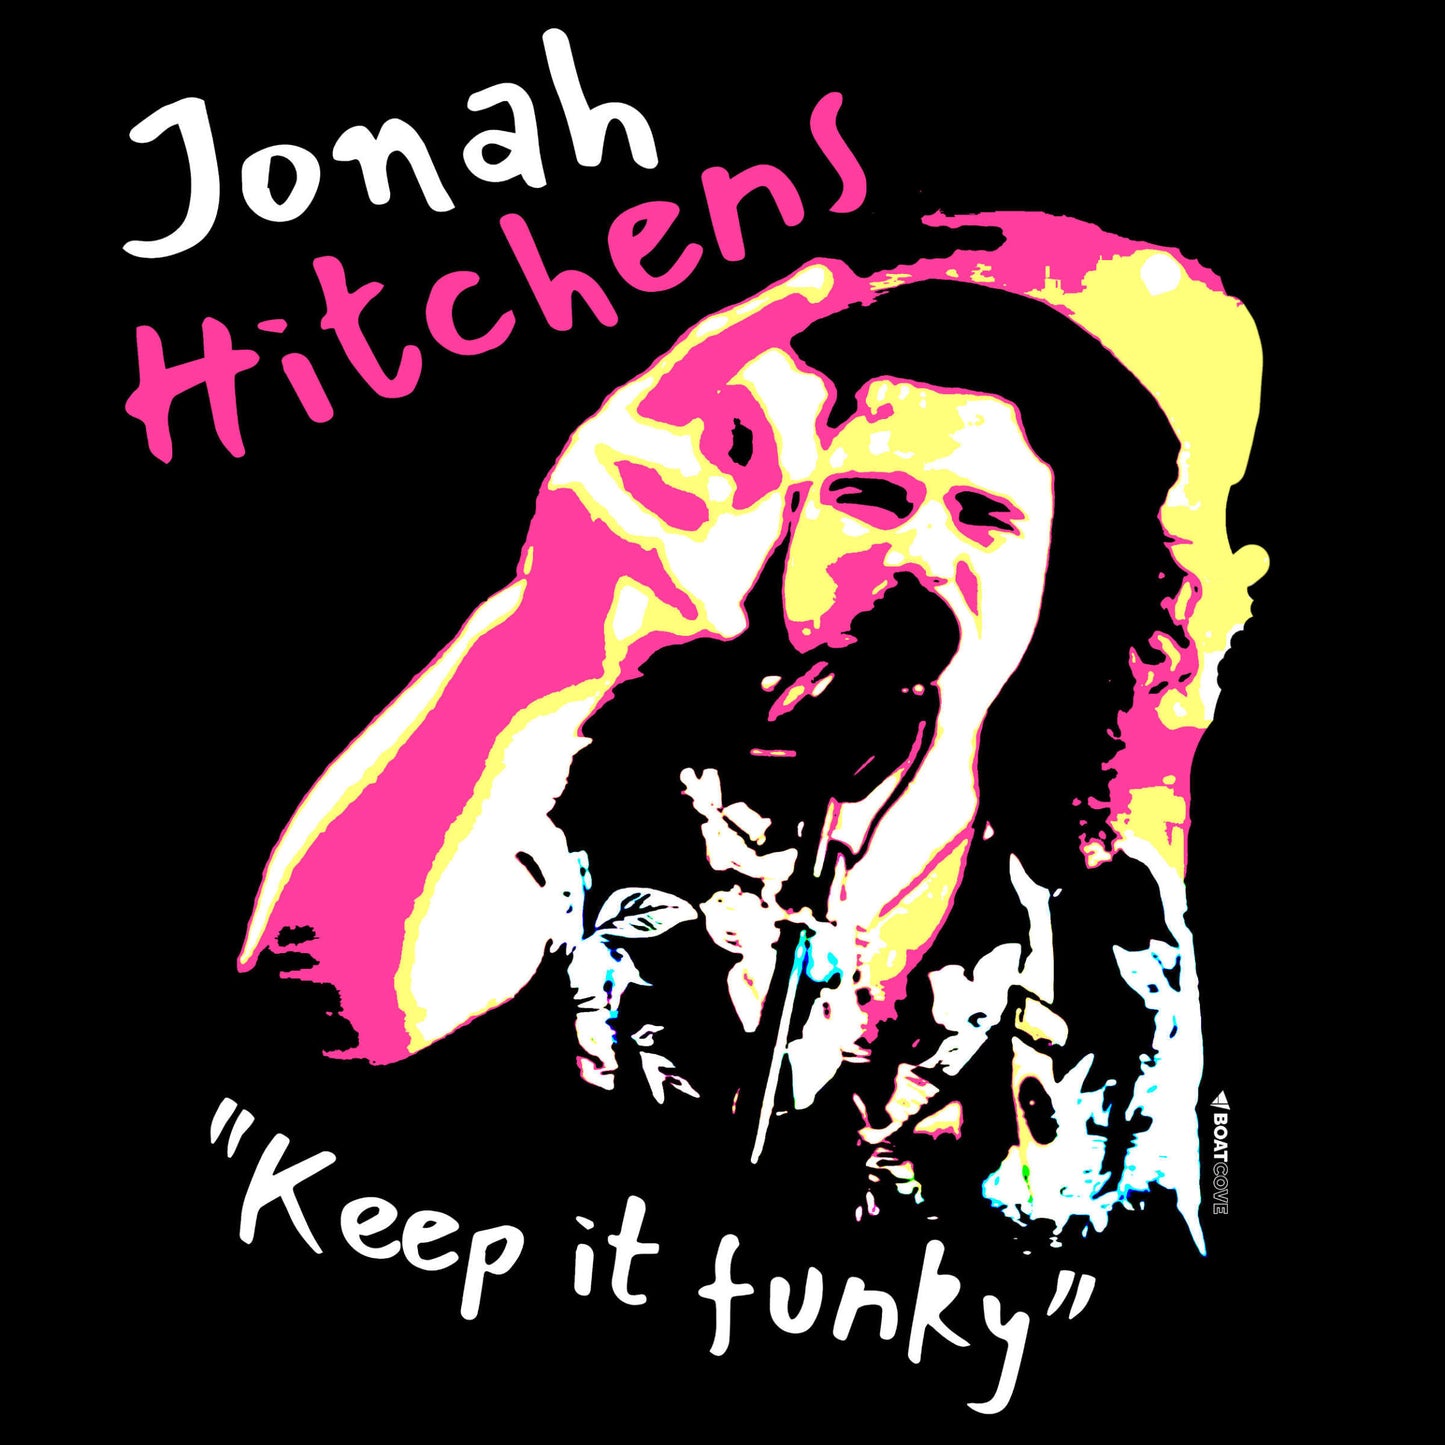 Jonah Hitchens "Keep it funky" Organic Tee Black